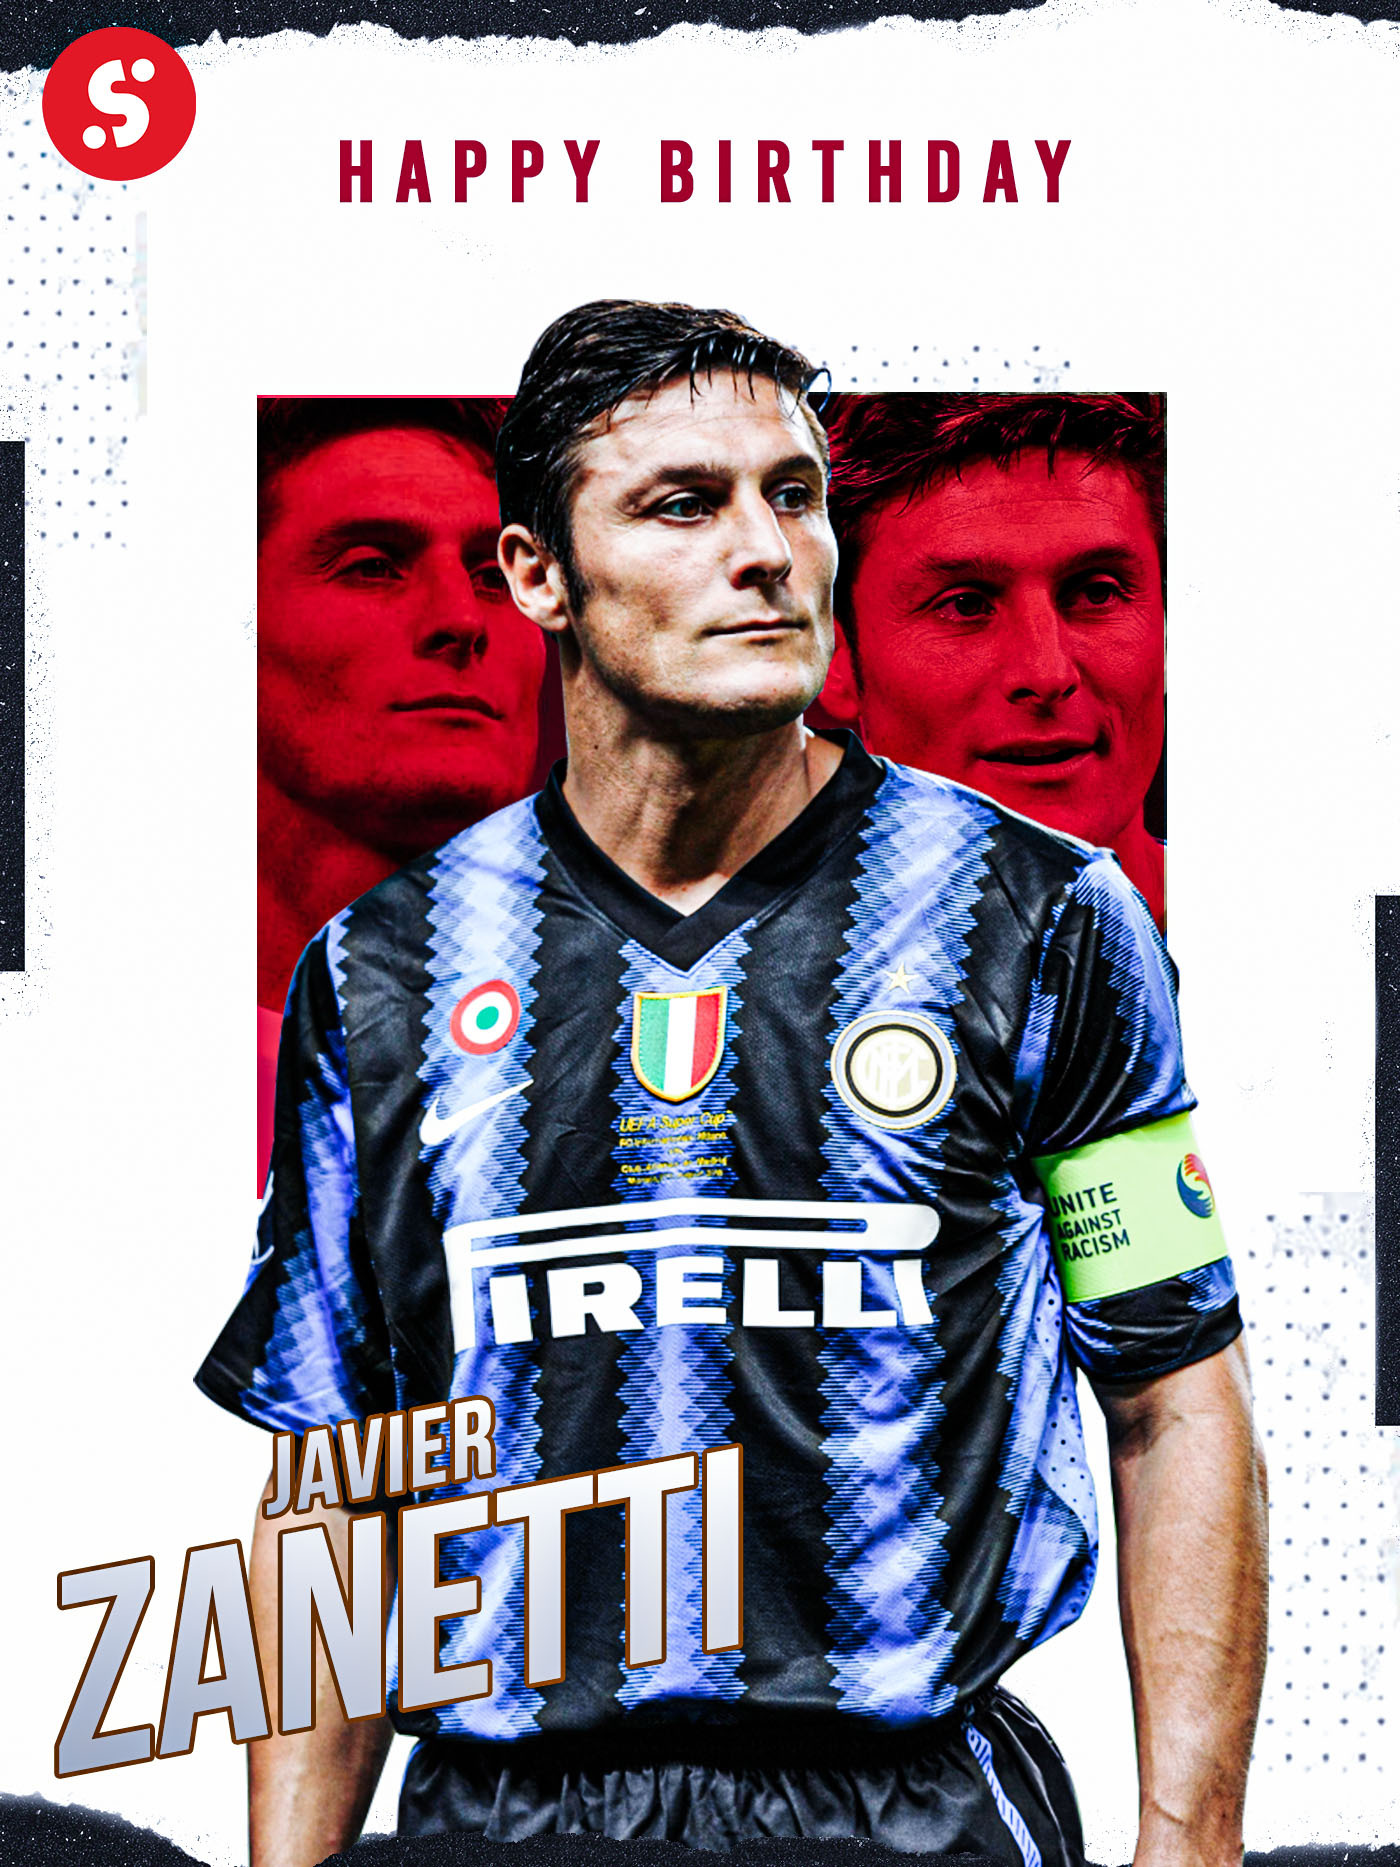 Happy 49th birthday to Javier Zanetti!    Inter Milan legend    